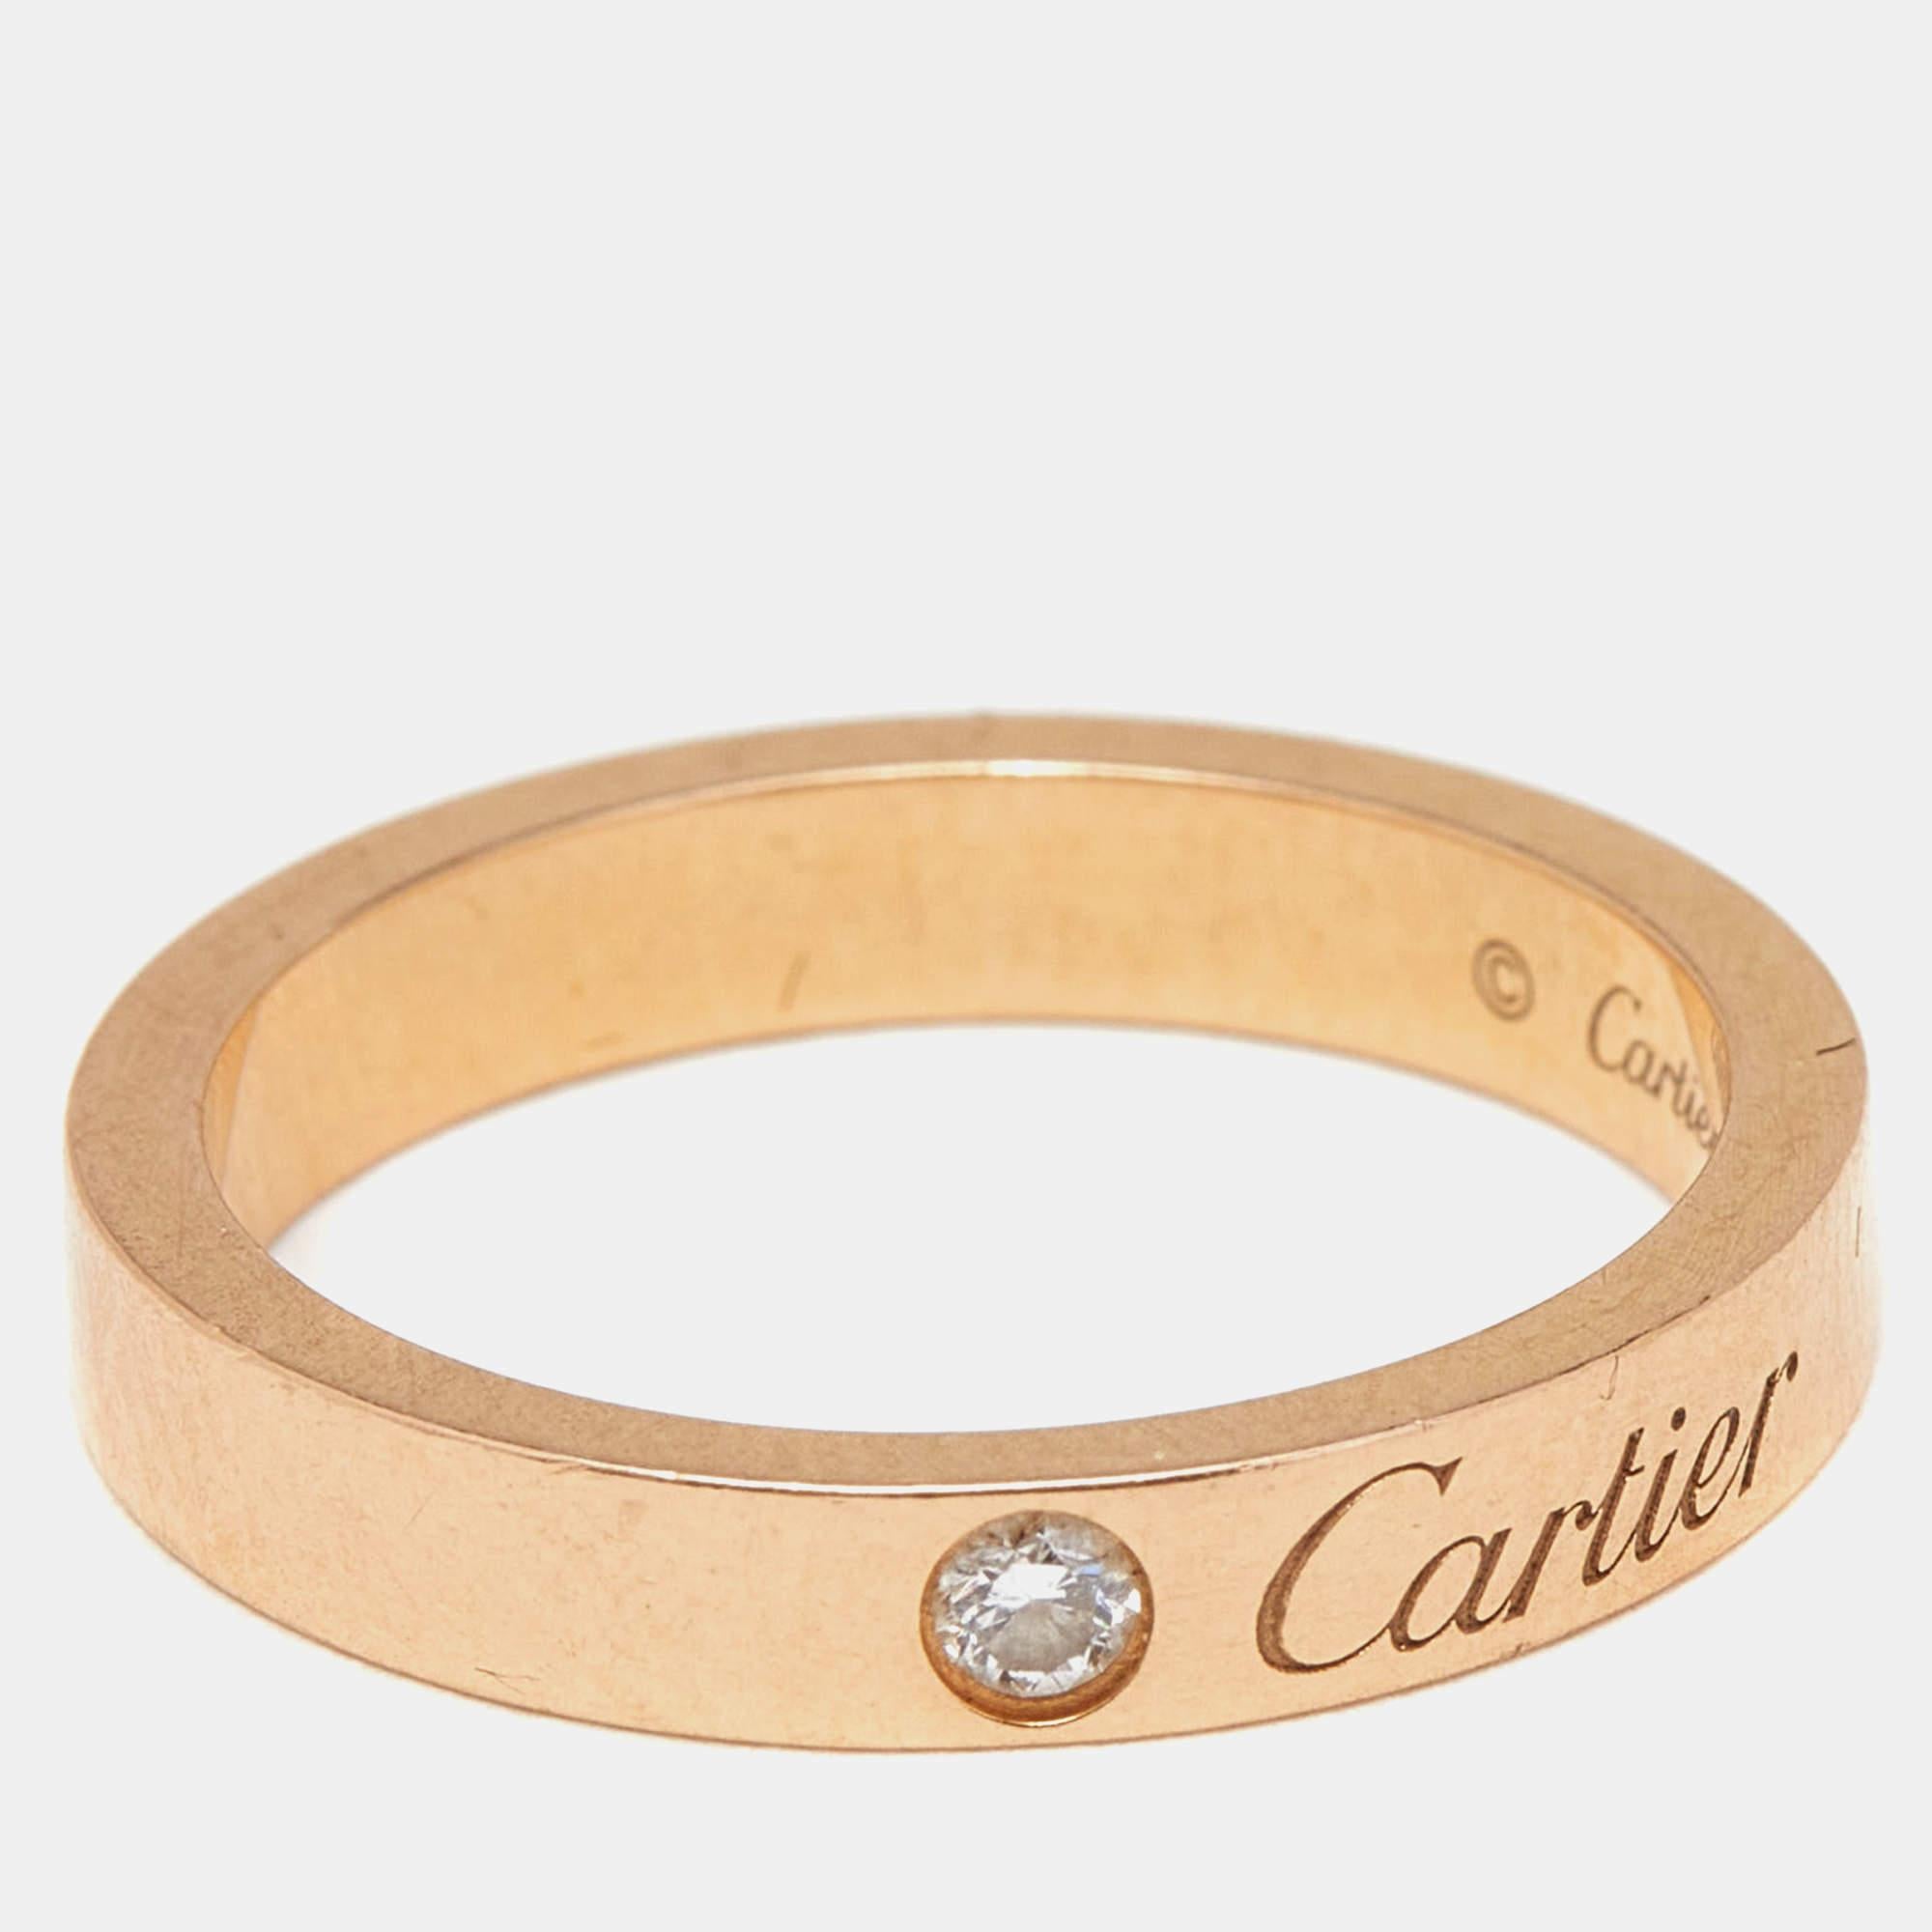 Cartier C De Cartier Diamond 18k Rose Gold Ring Size 50 4